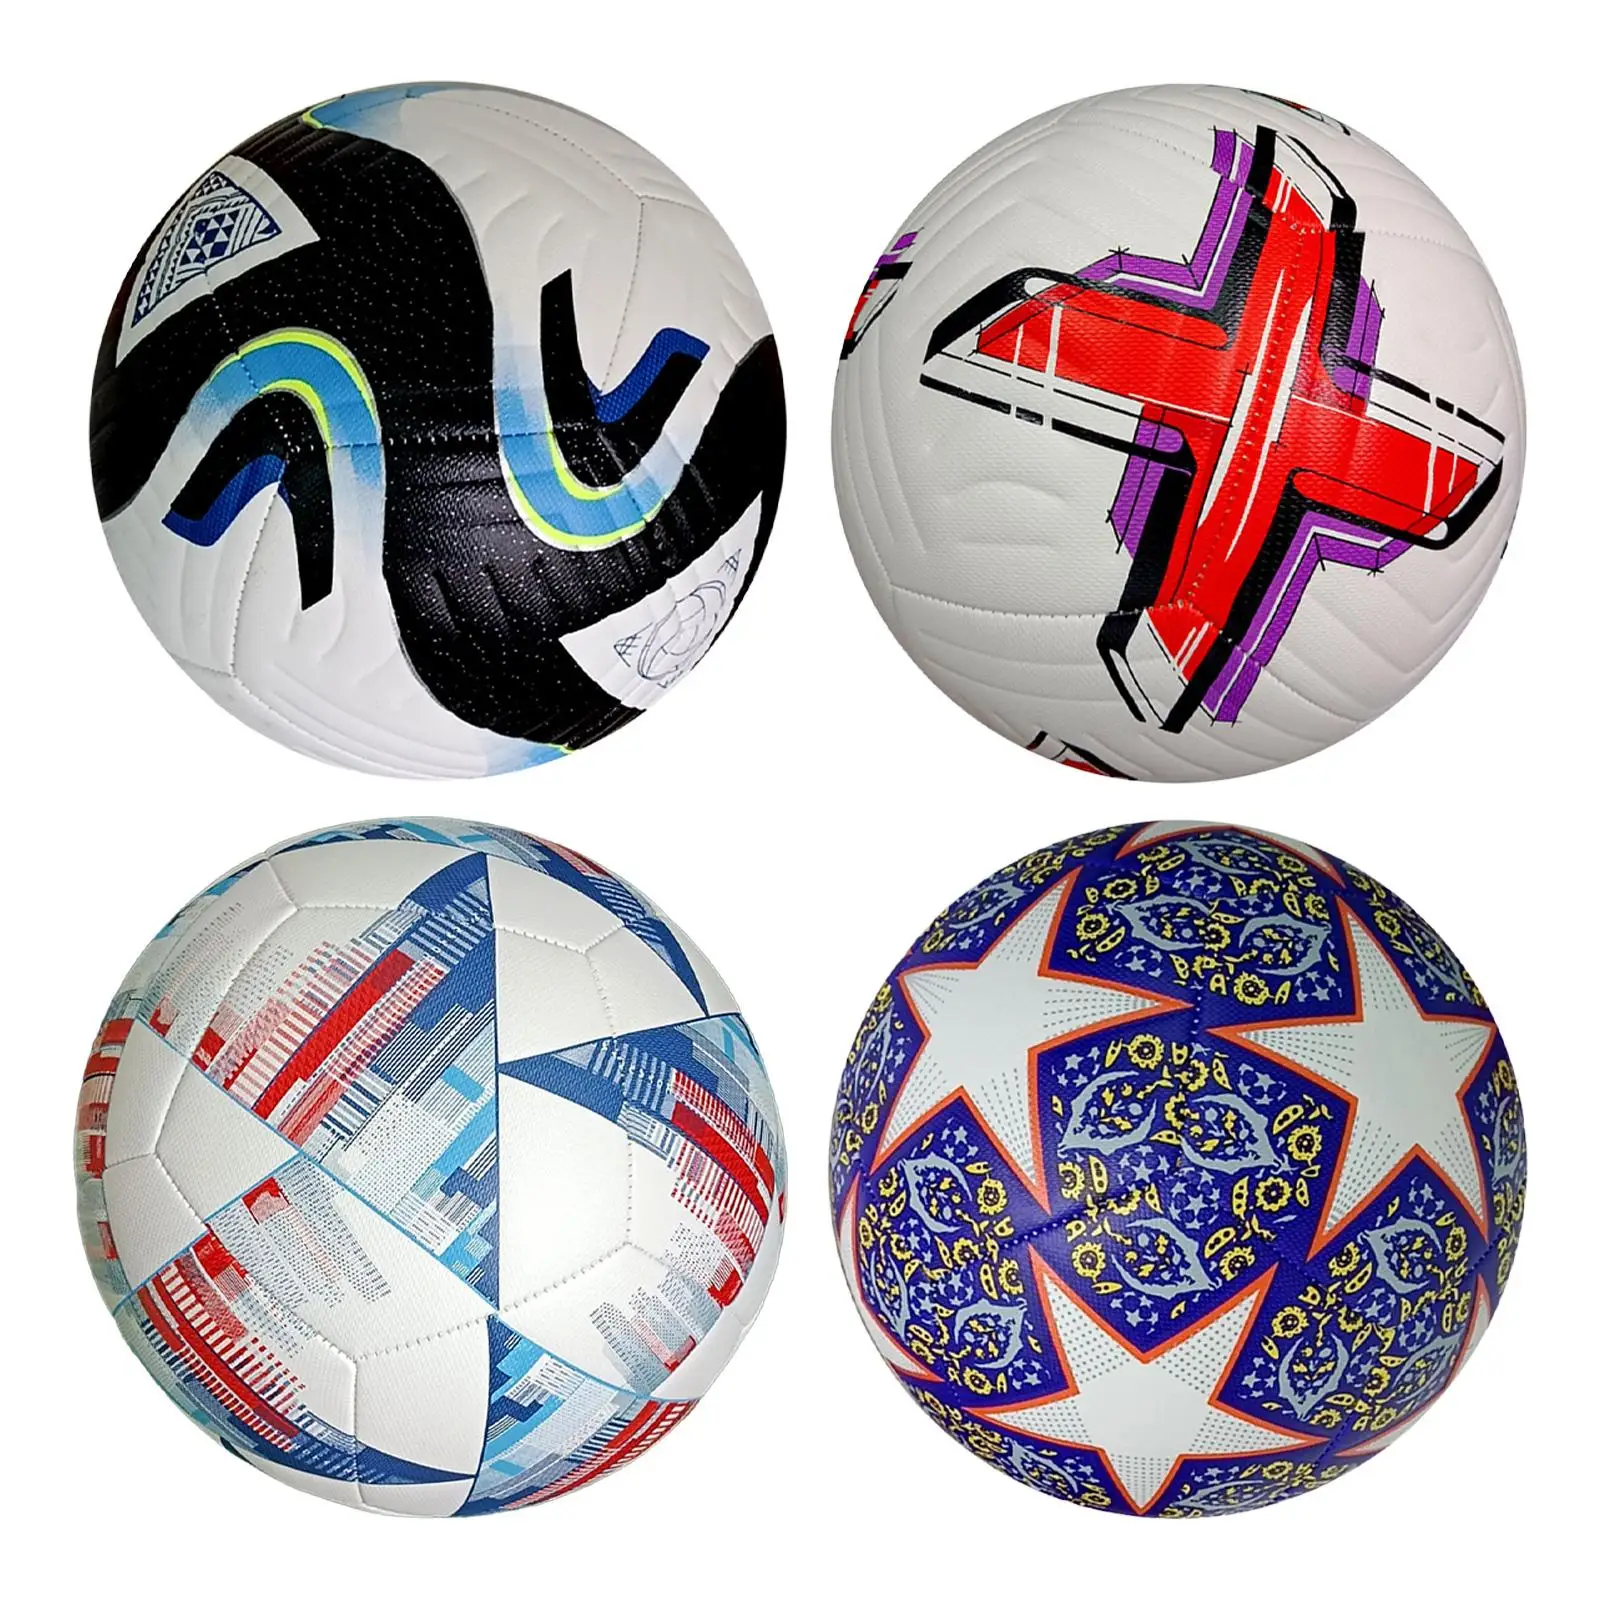 Soccer Ball Size 5 Machine Stitched Professional Lightweight Official Match Ball